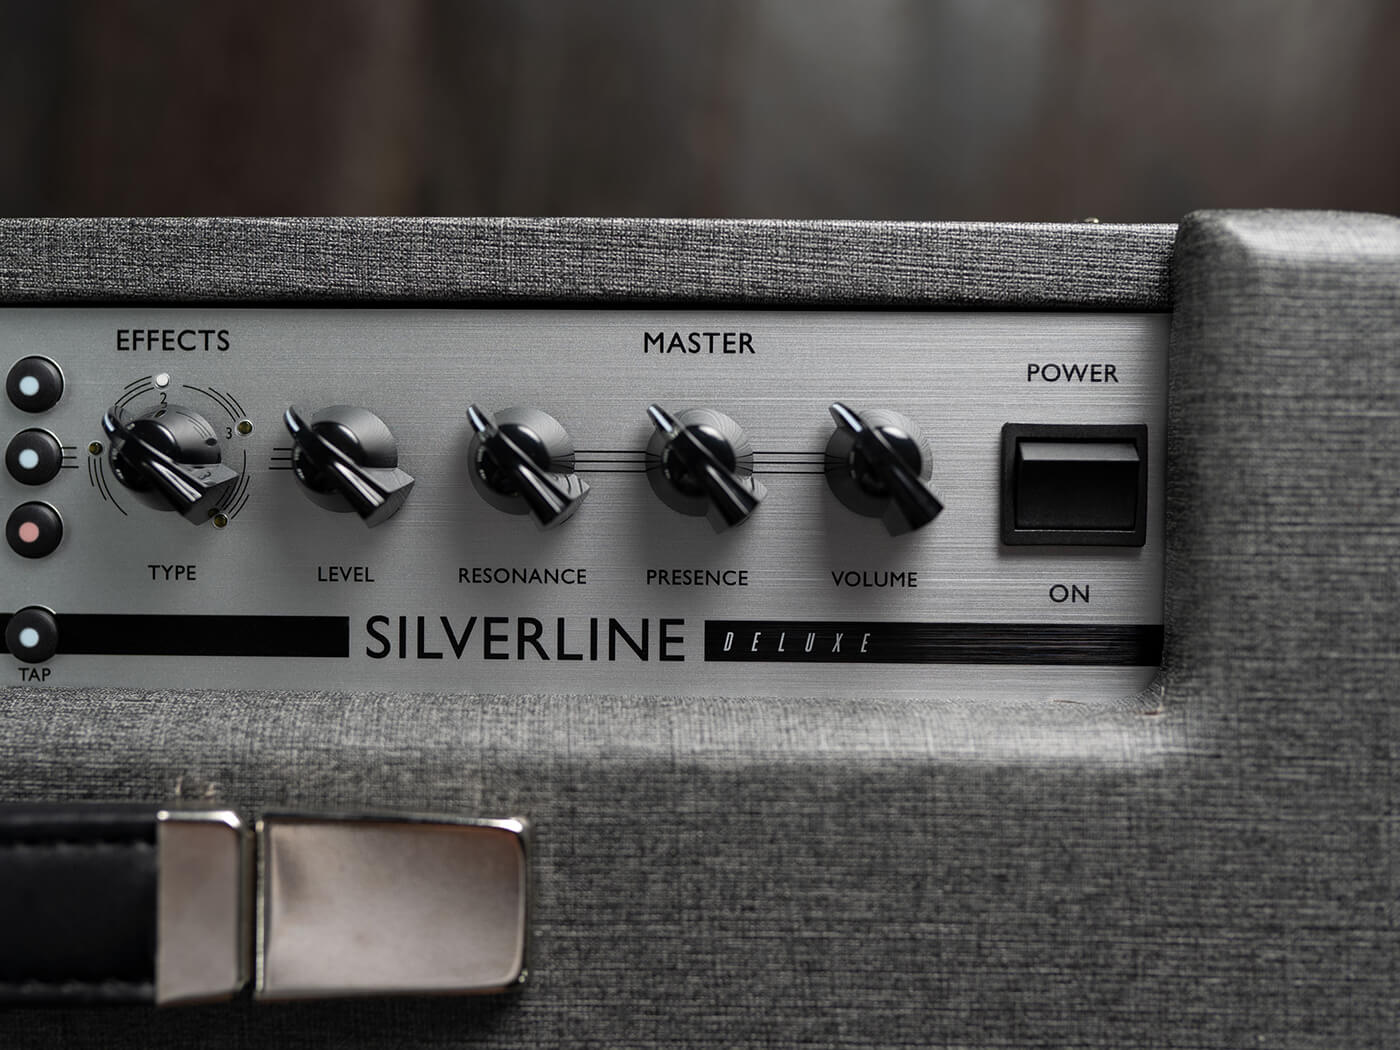 Blackstar unveils the Silverline, its next generation of 